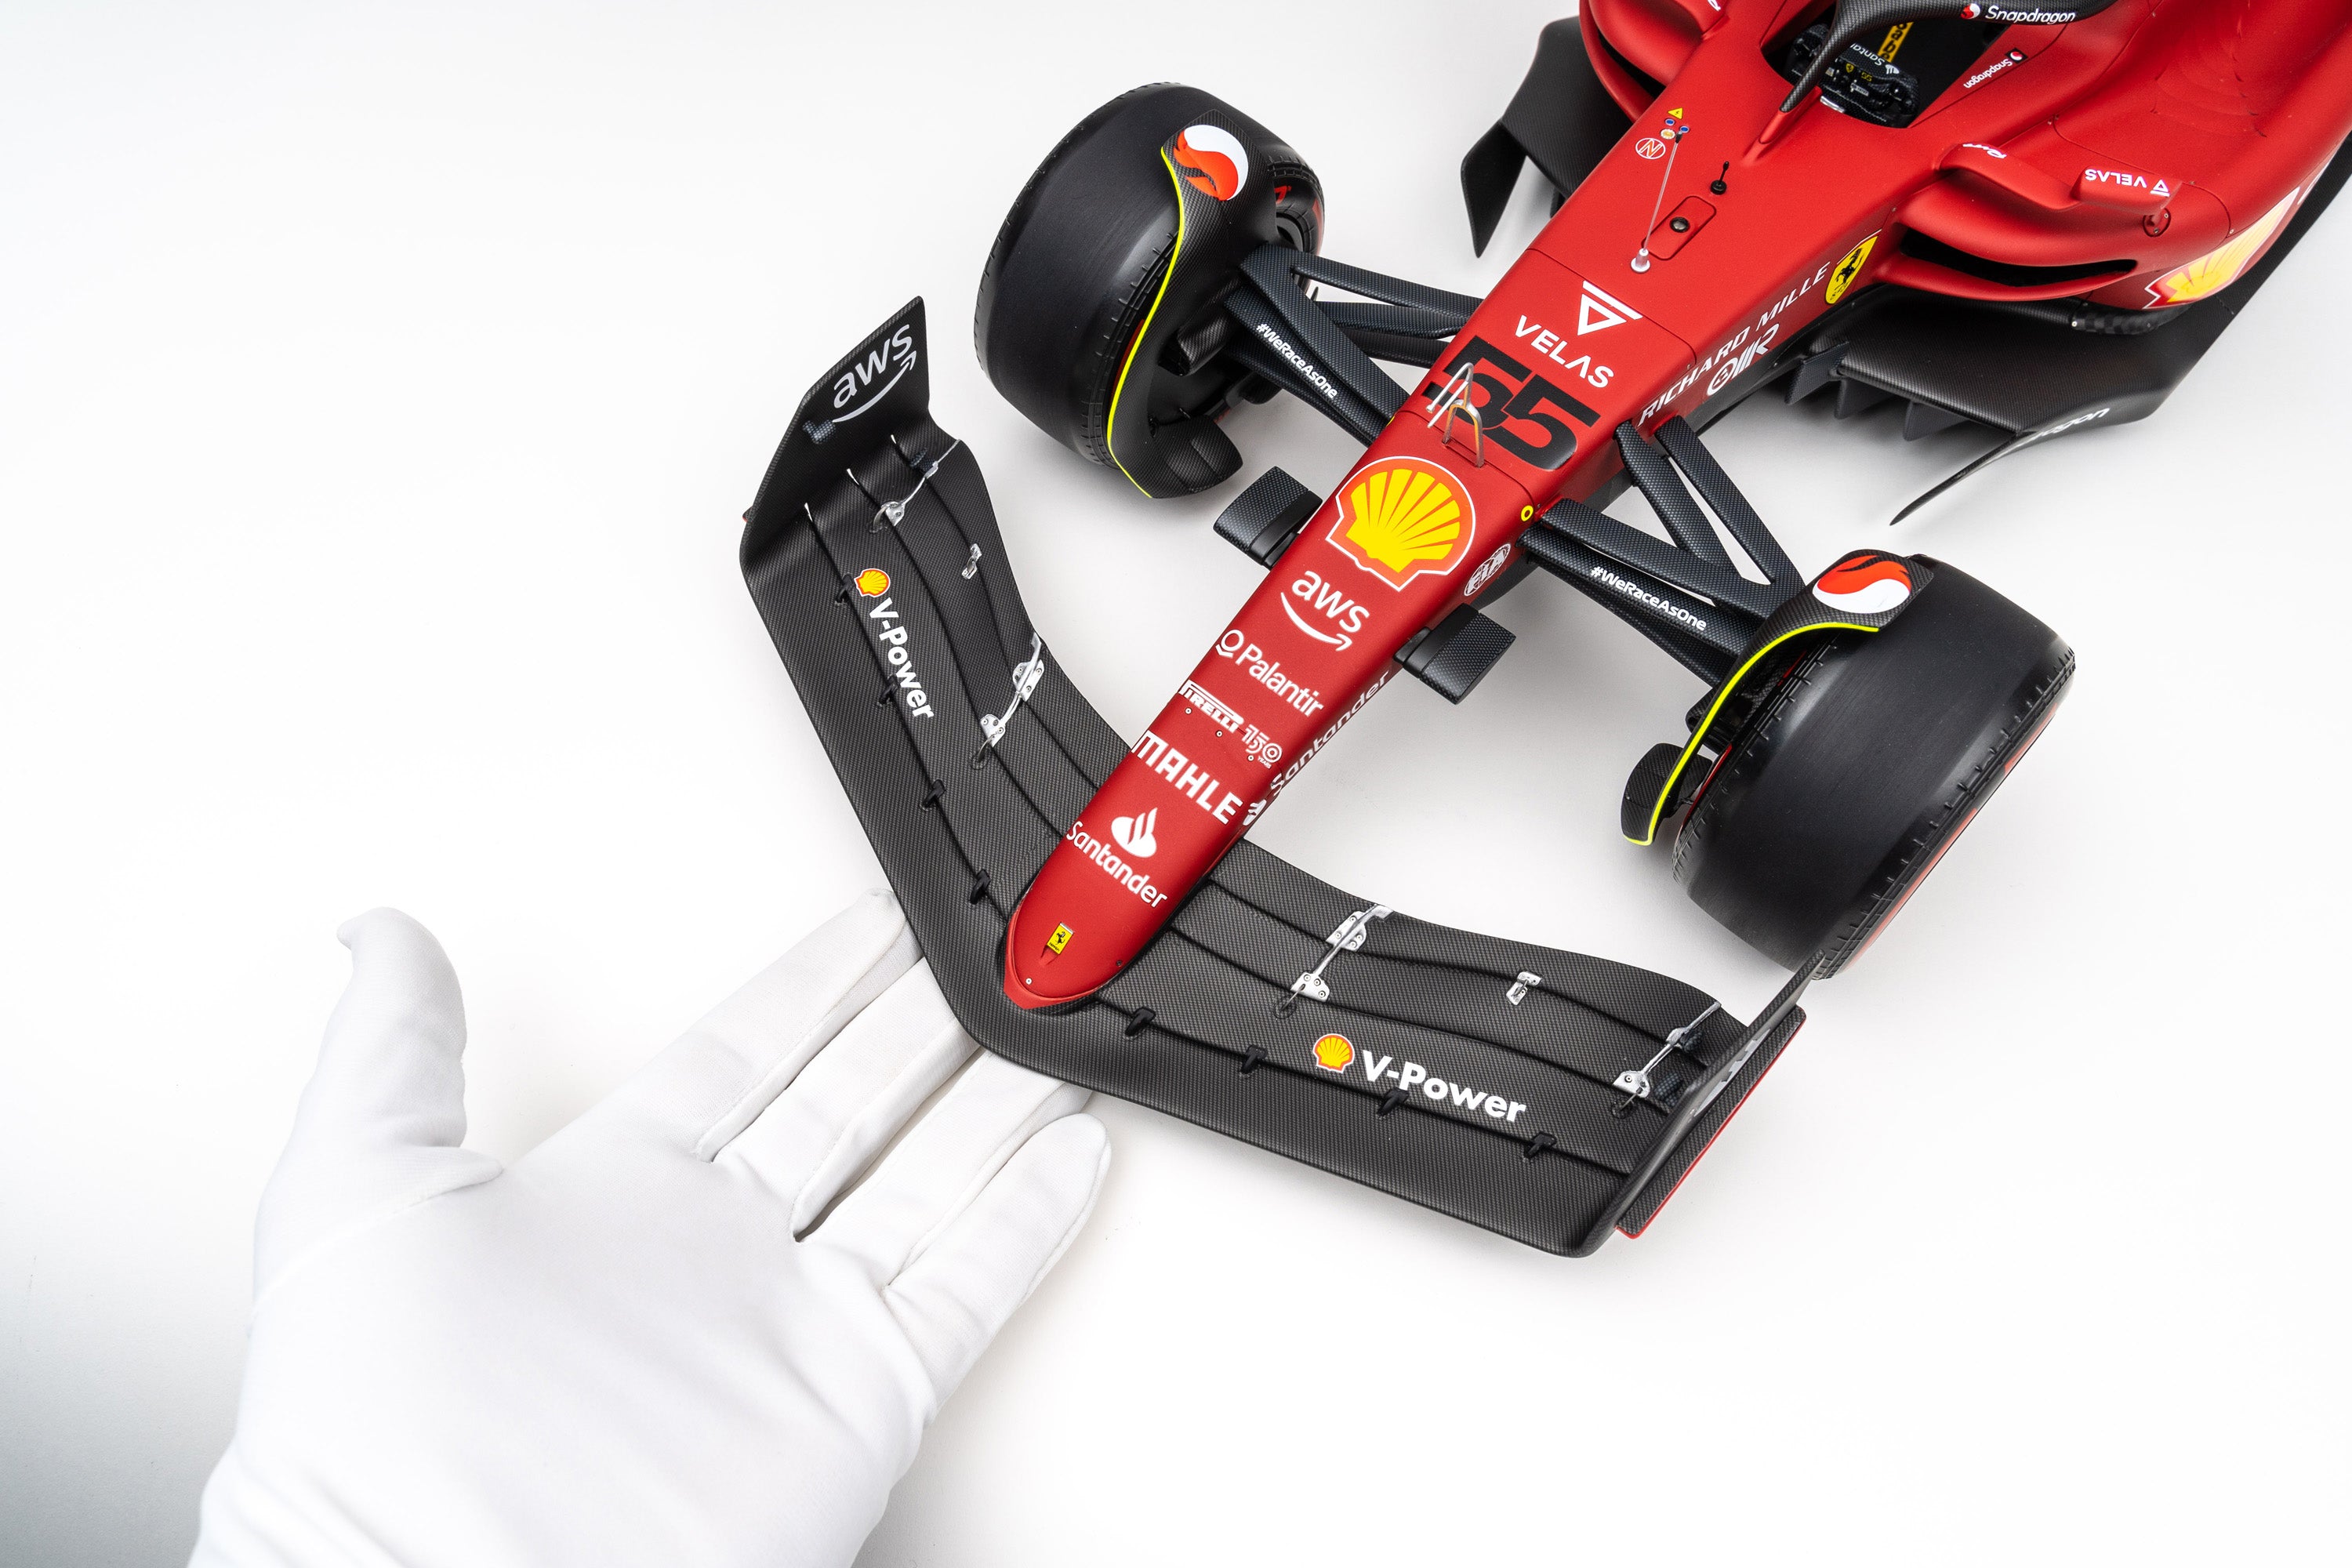 Ferrari F1-75 - Gran Premio de Baréin 2022 – Amalgam Collection